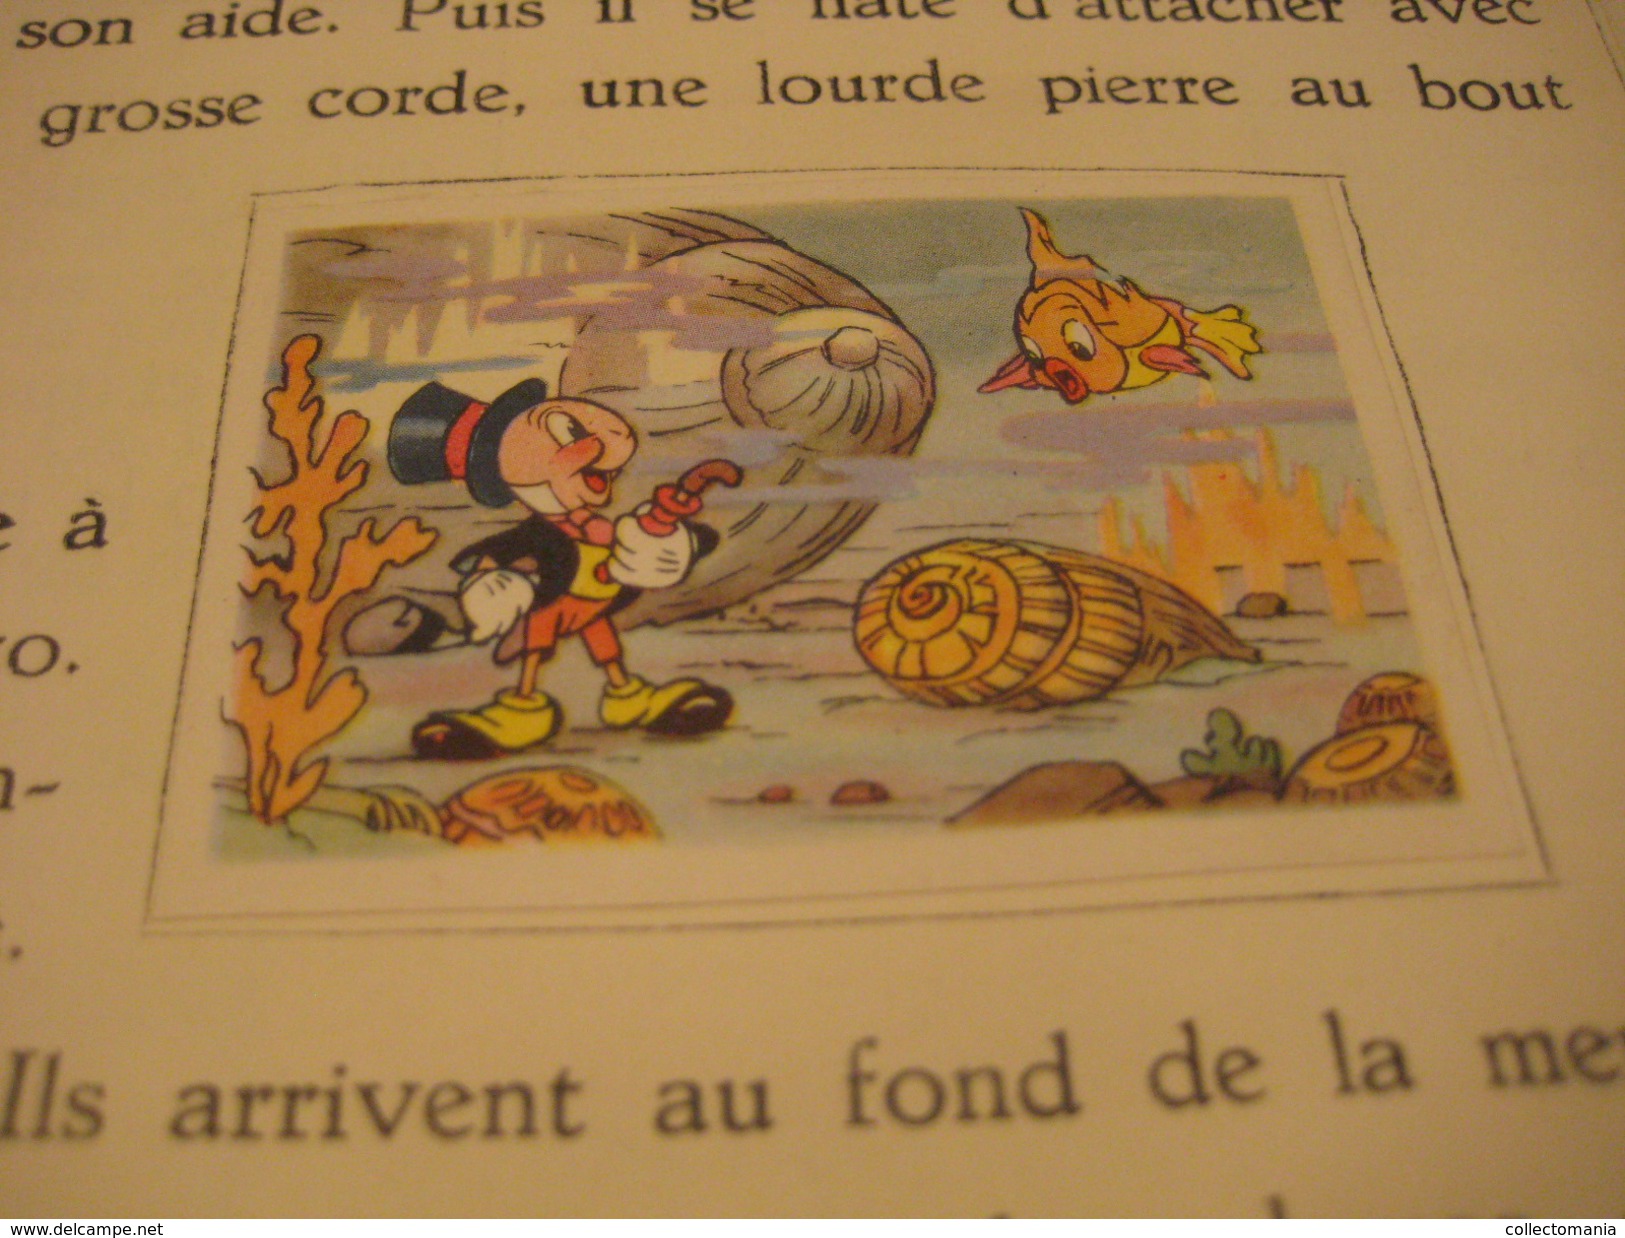 4 complete albulms  '50 's De Beukelaer, in albums, Disney, chocolat cards Robin hood,3 pigs, Peter Pan, Pinocchio VG